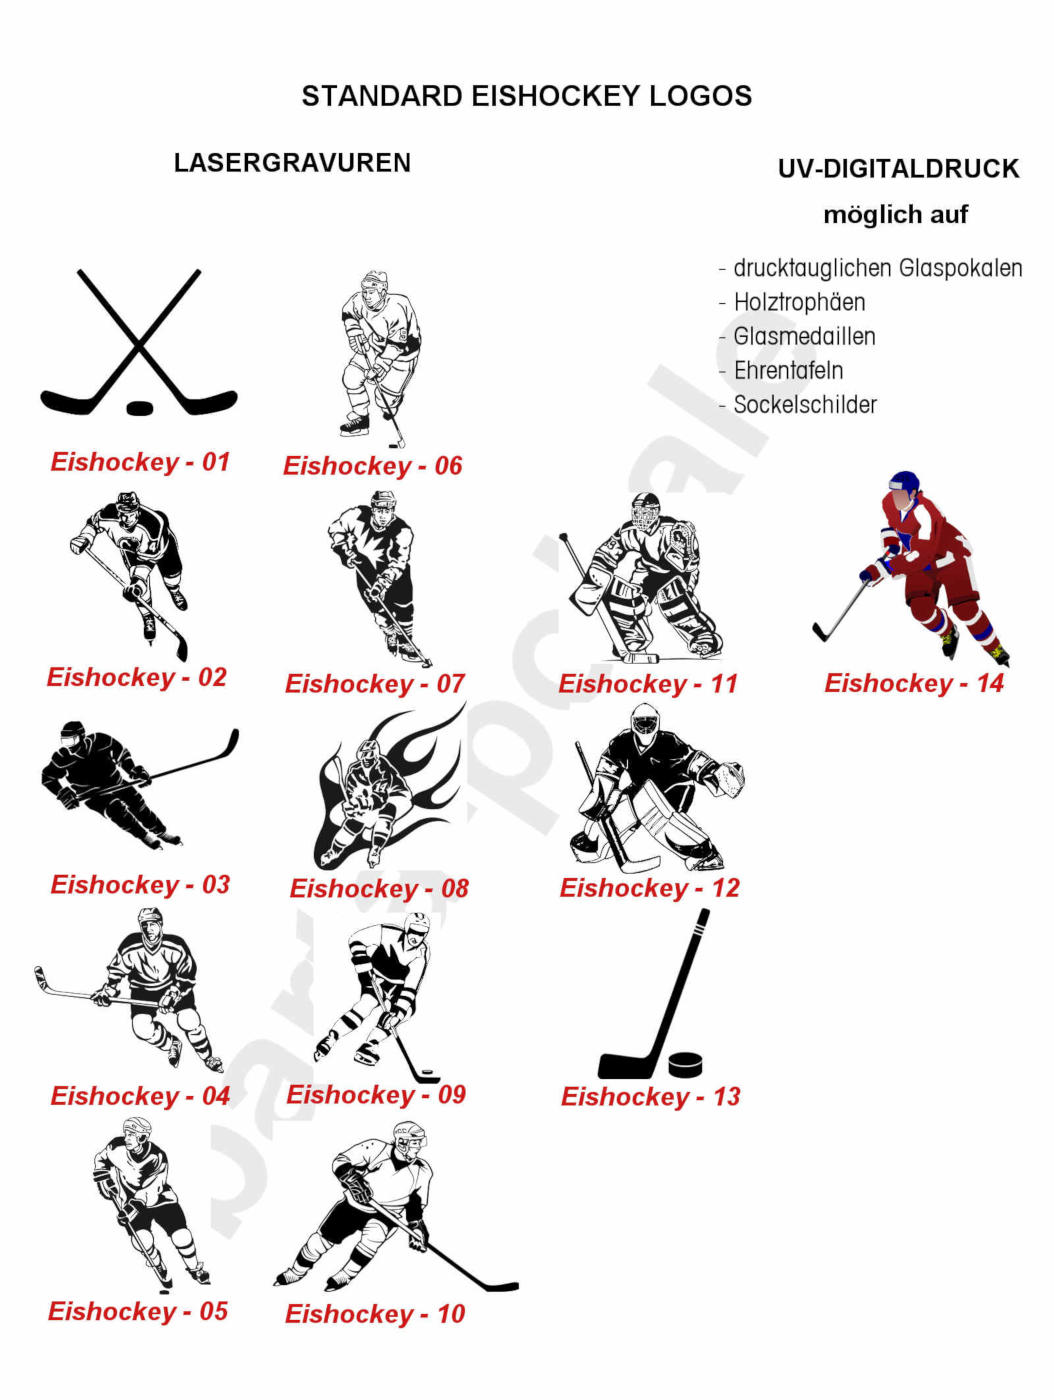 Standard Logos Eishockey